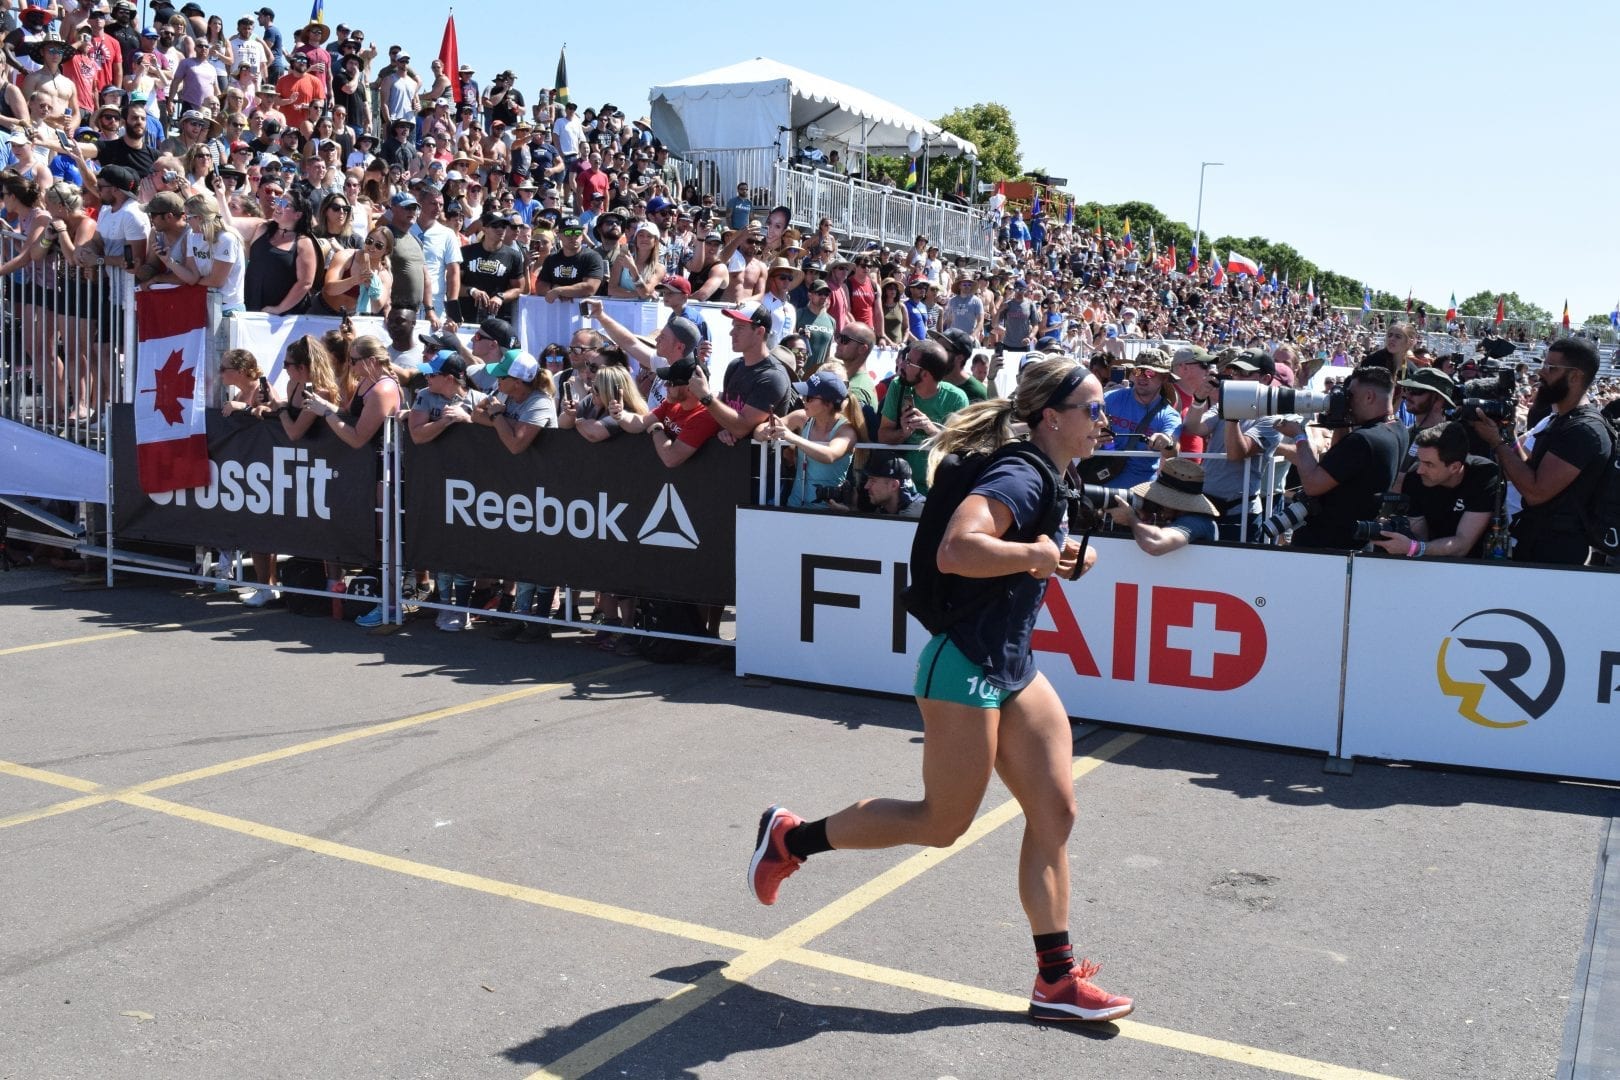 Amanda Barnhart completes the Ruck Run event at the 2019 CrossFit Games